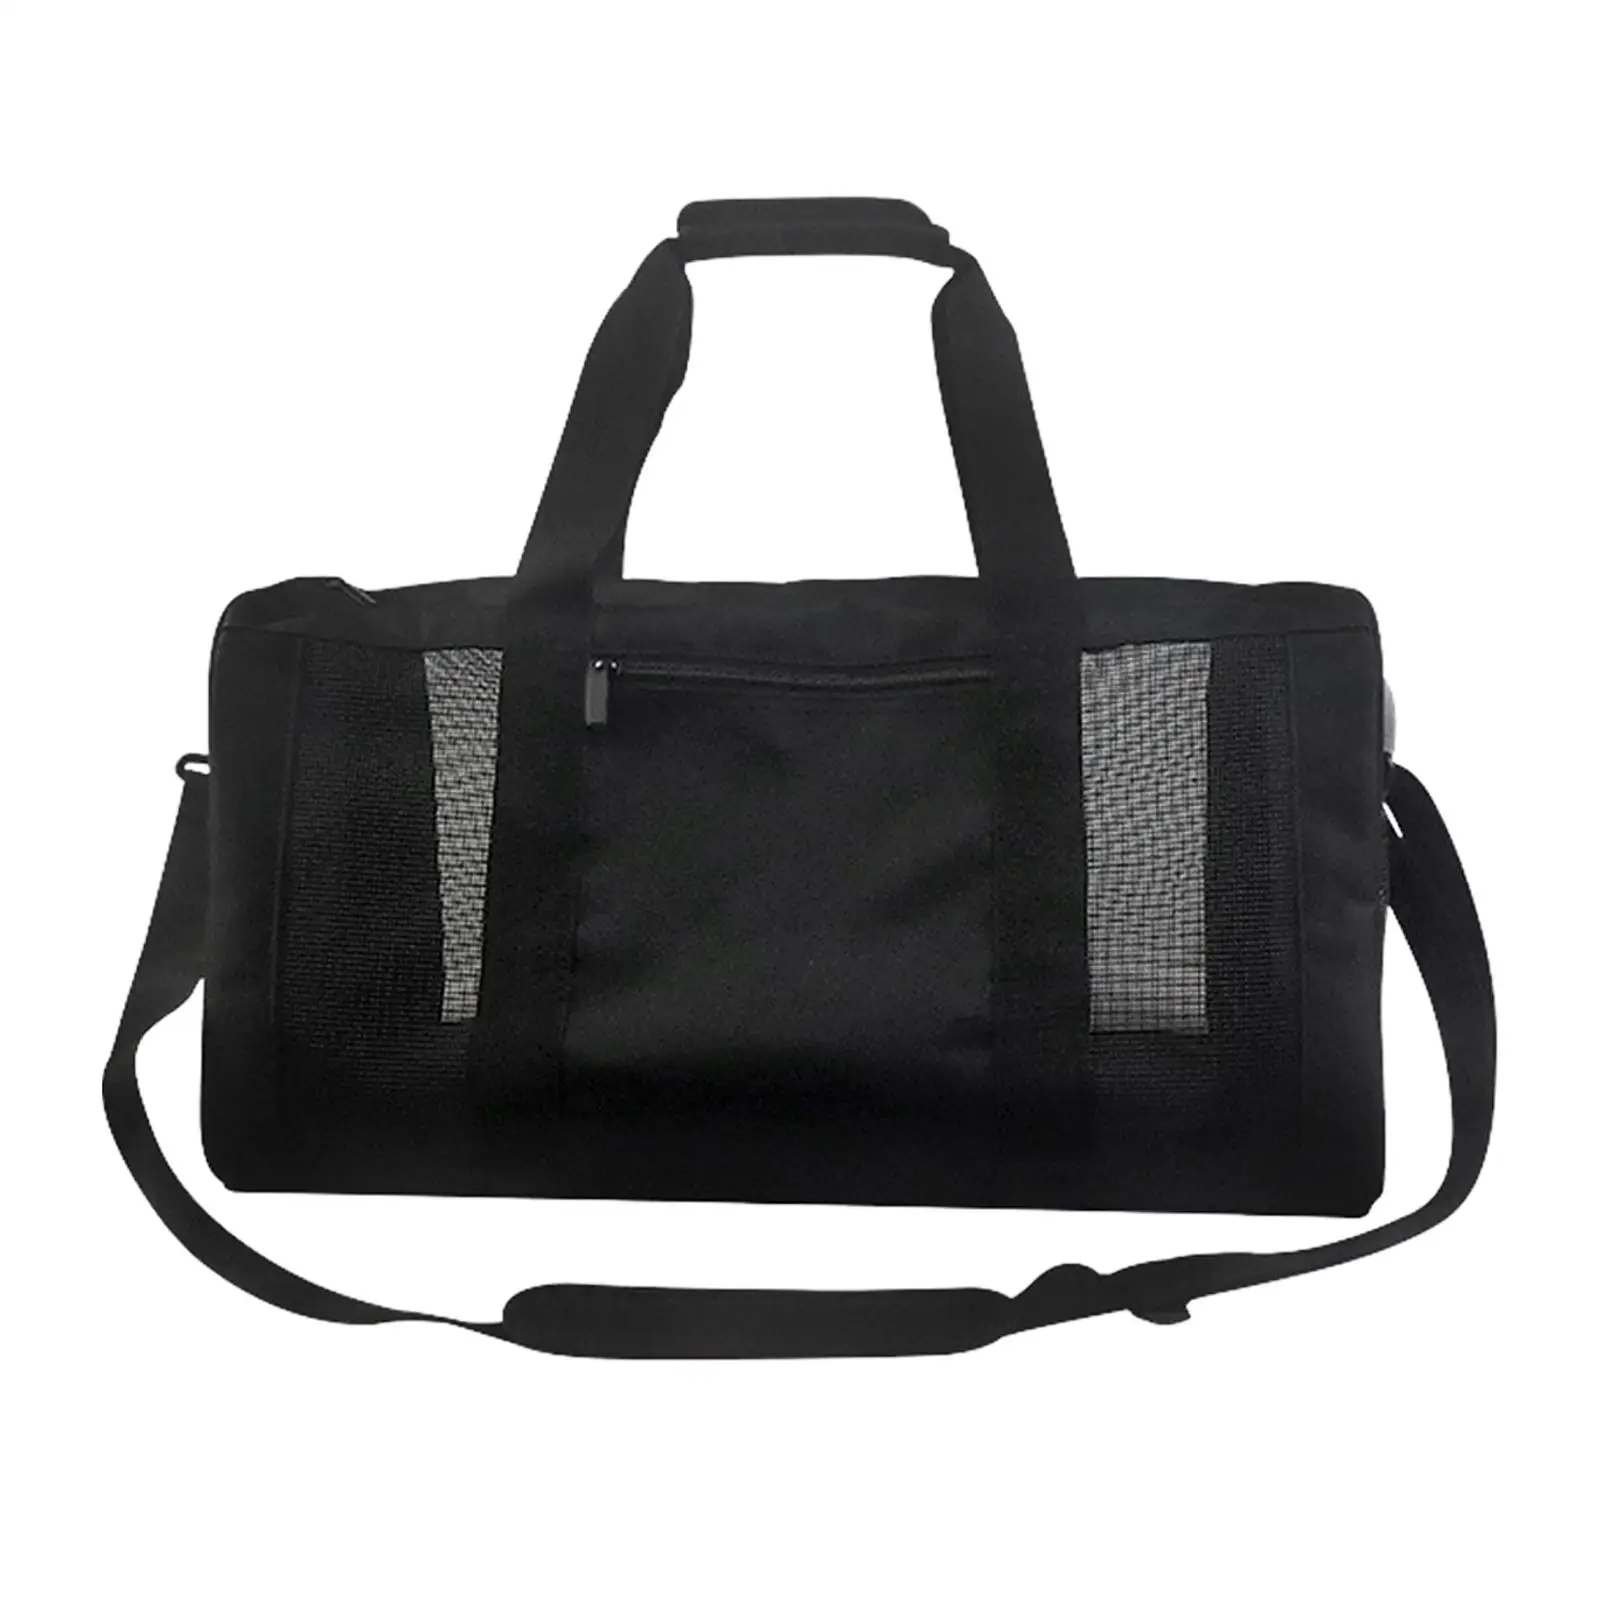 Gym Mesh Bag Carry on Bag Adjustable Strap Travel Easy Dry Lightweight Sports Gym Sports Gym Bag Gym Mesh Roll Bag Fitness Bag